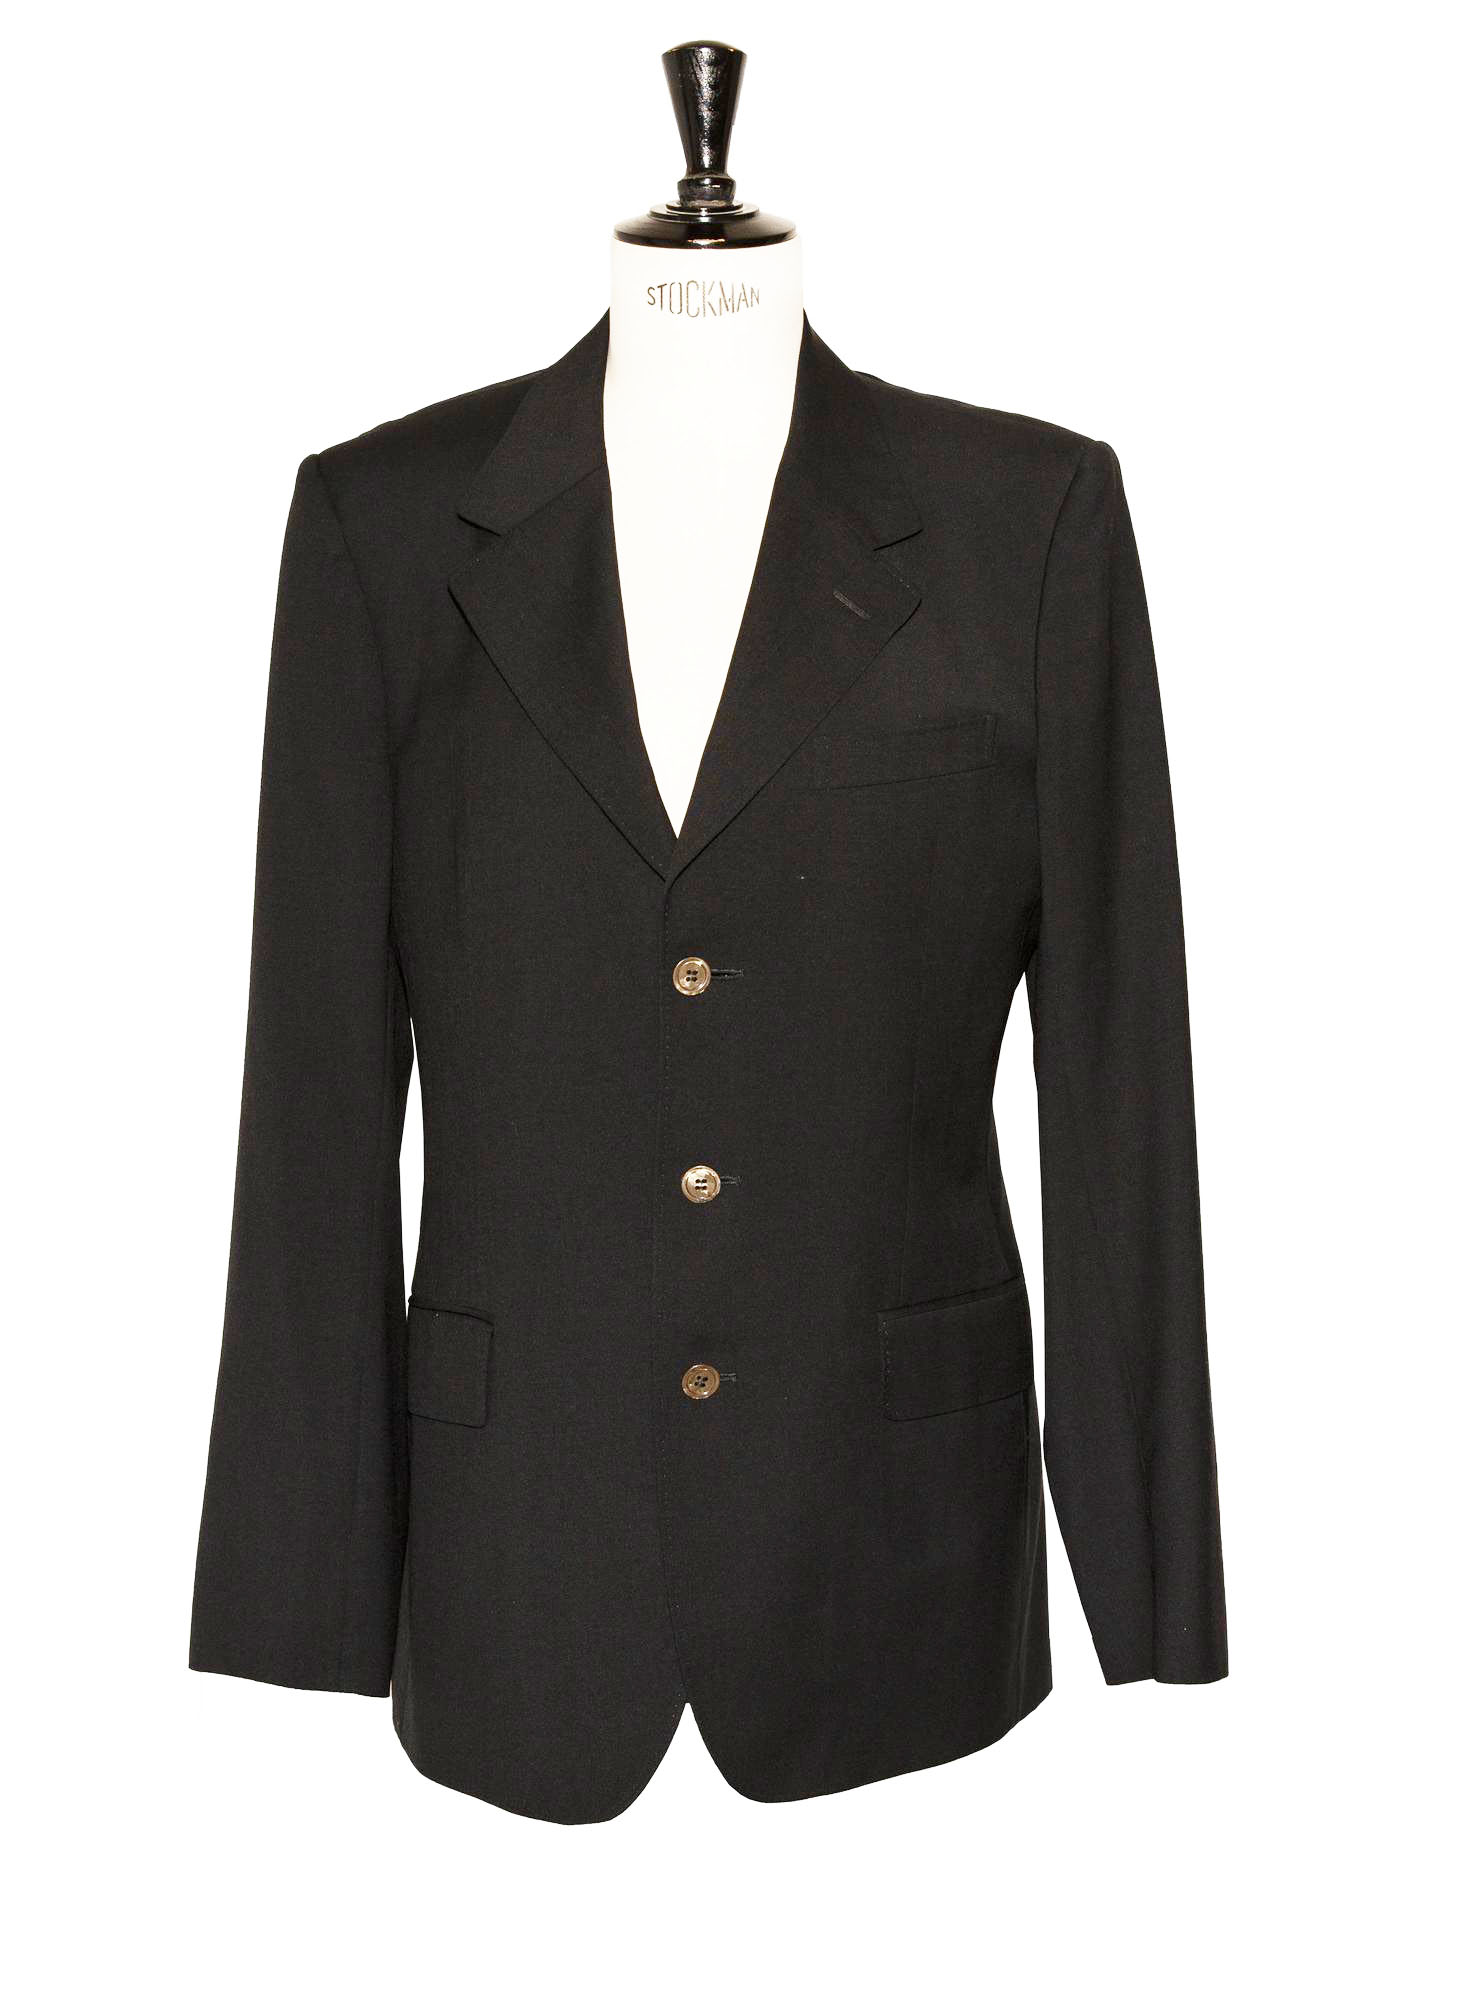 Yves Saint Laurent MAN JACKET Description: Black wool men jacket with 3...